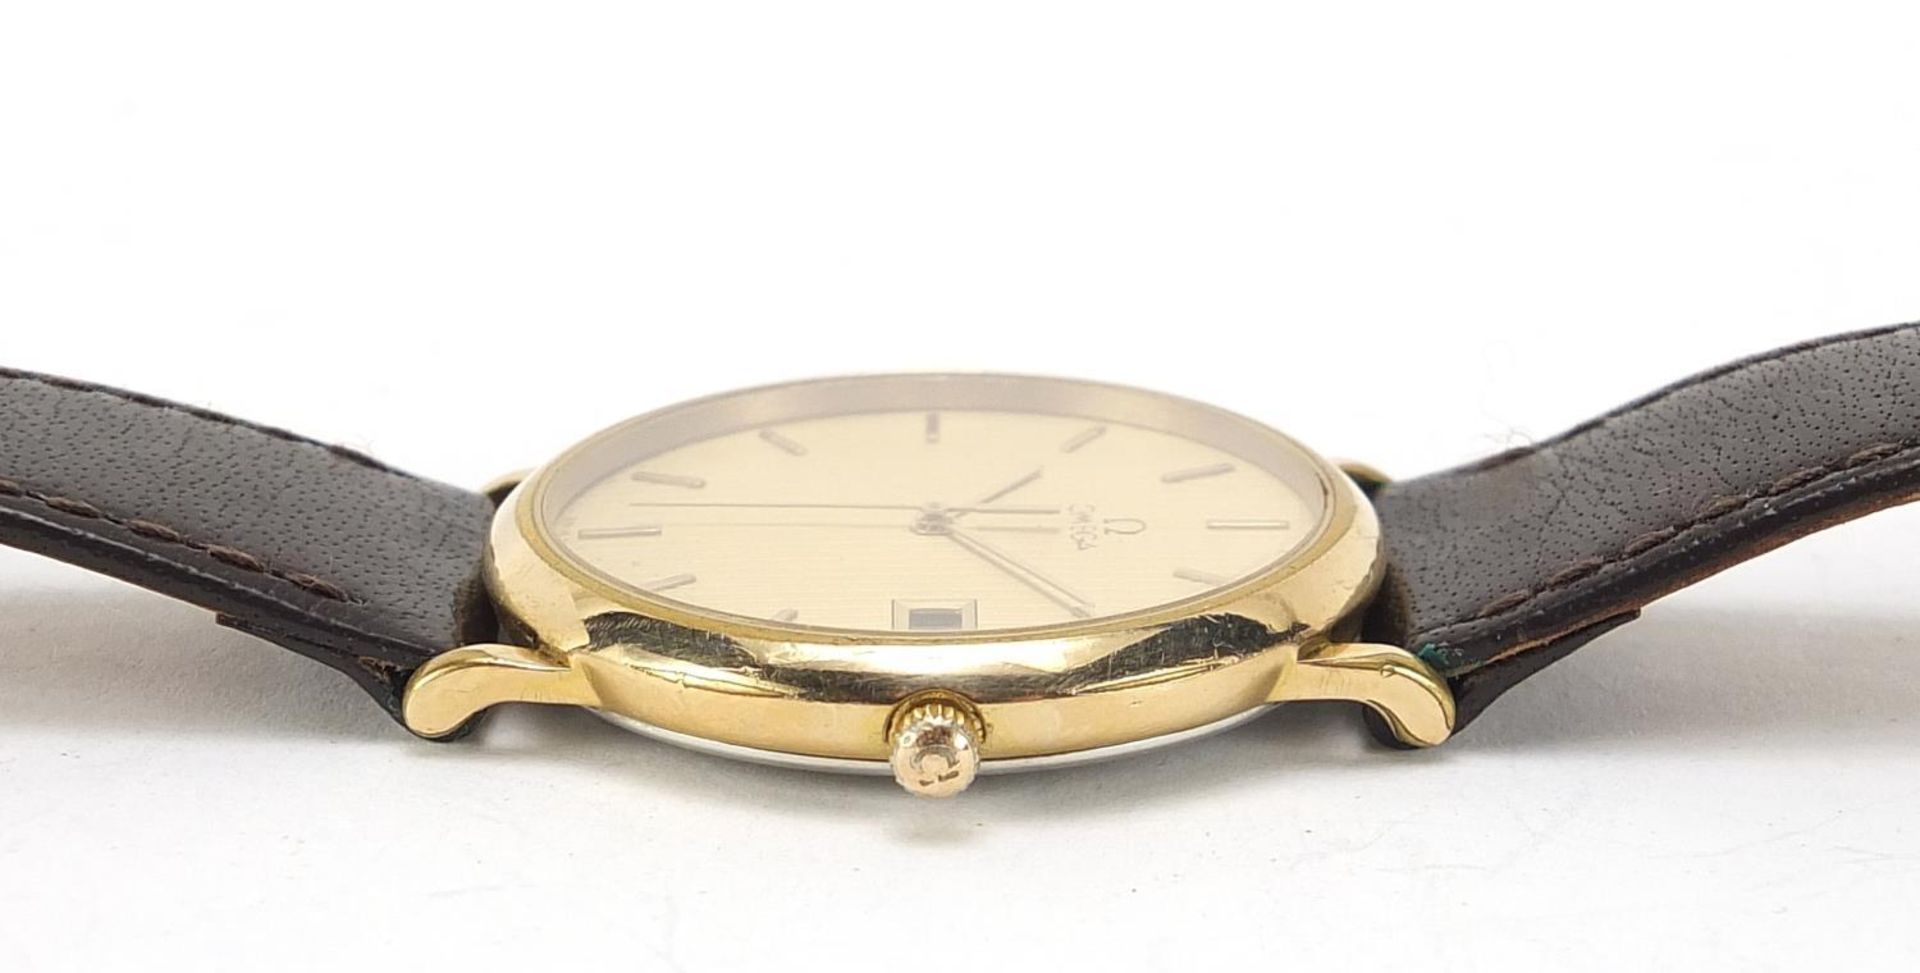 Omega Deville, gentlemen's quartz wristwatch with date aperture, 32.0mm in diameter : - Image 3 of 7